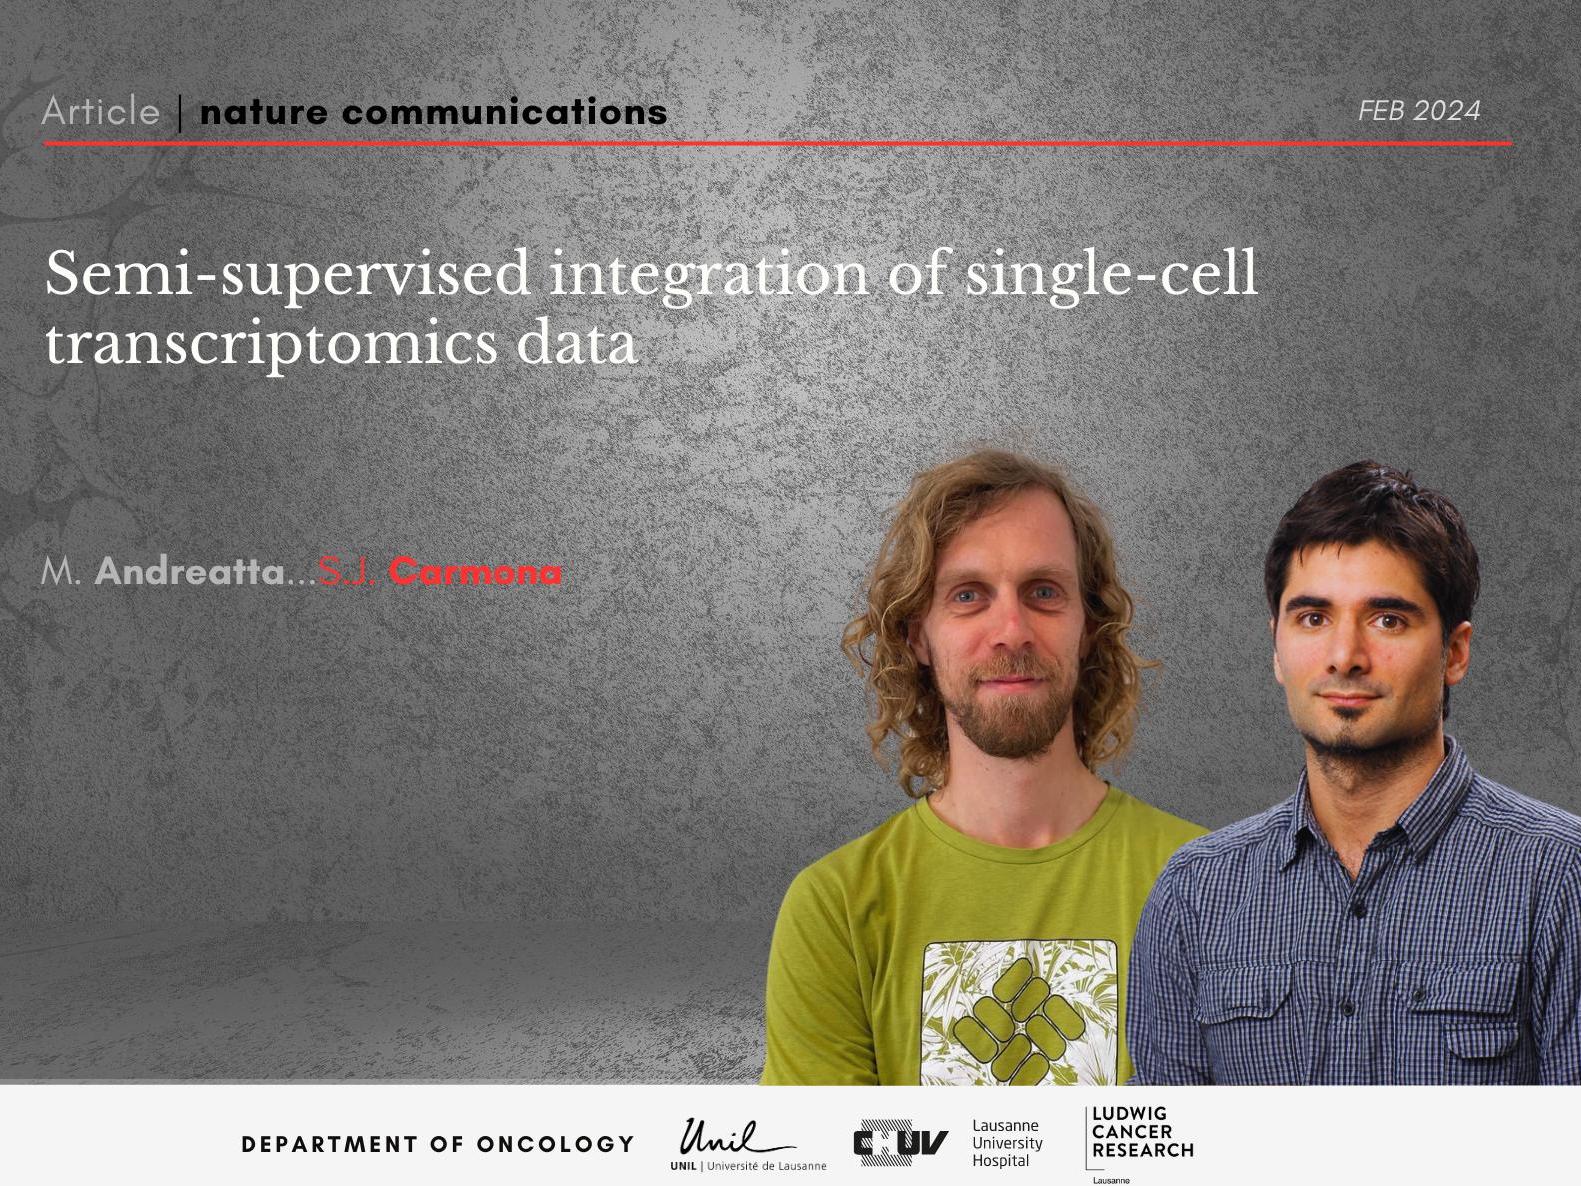 New study: Semi-supervised integration of single-cell transcriptomics data
